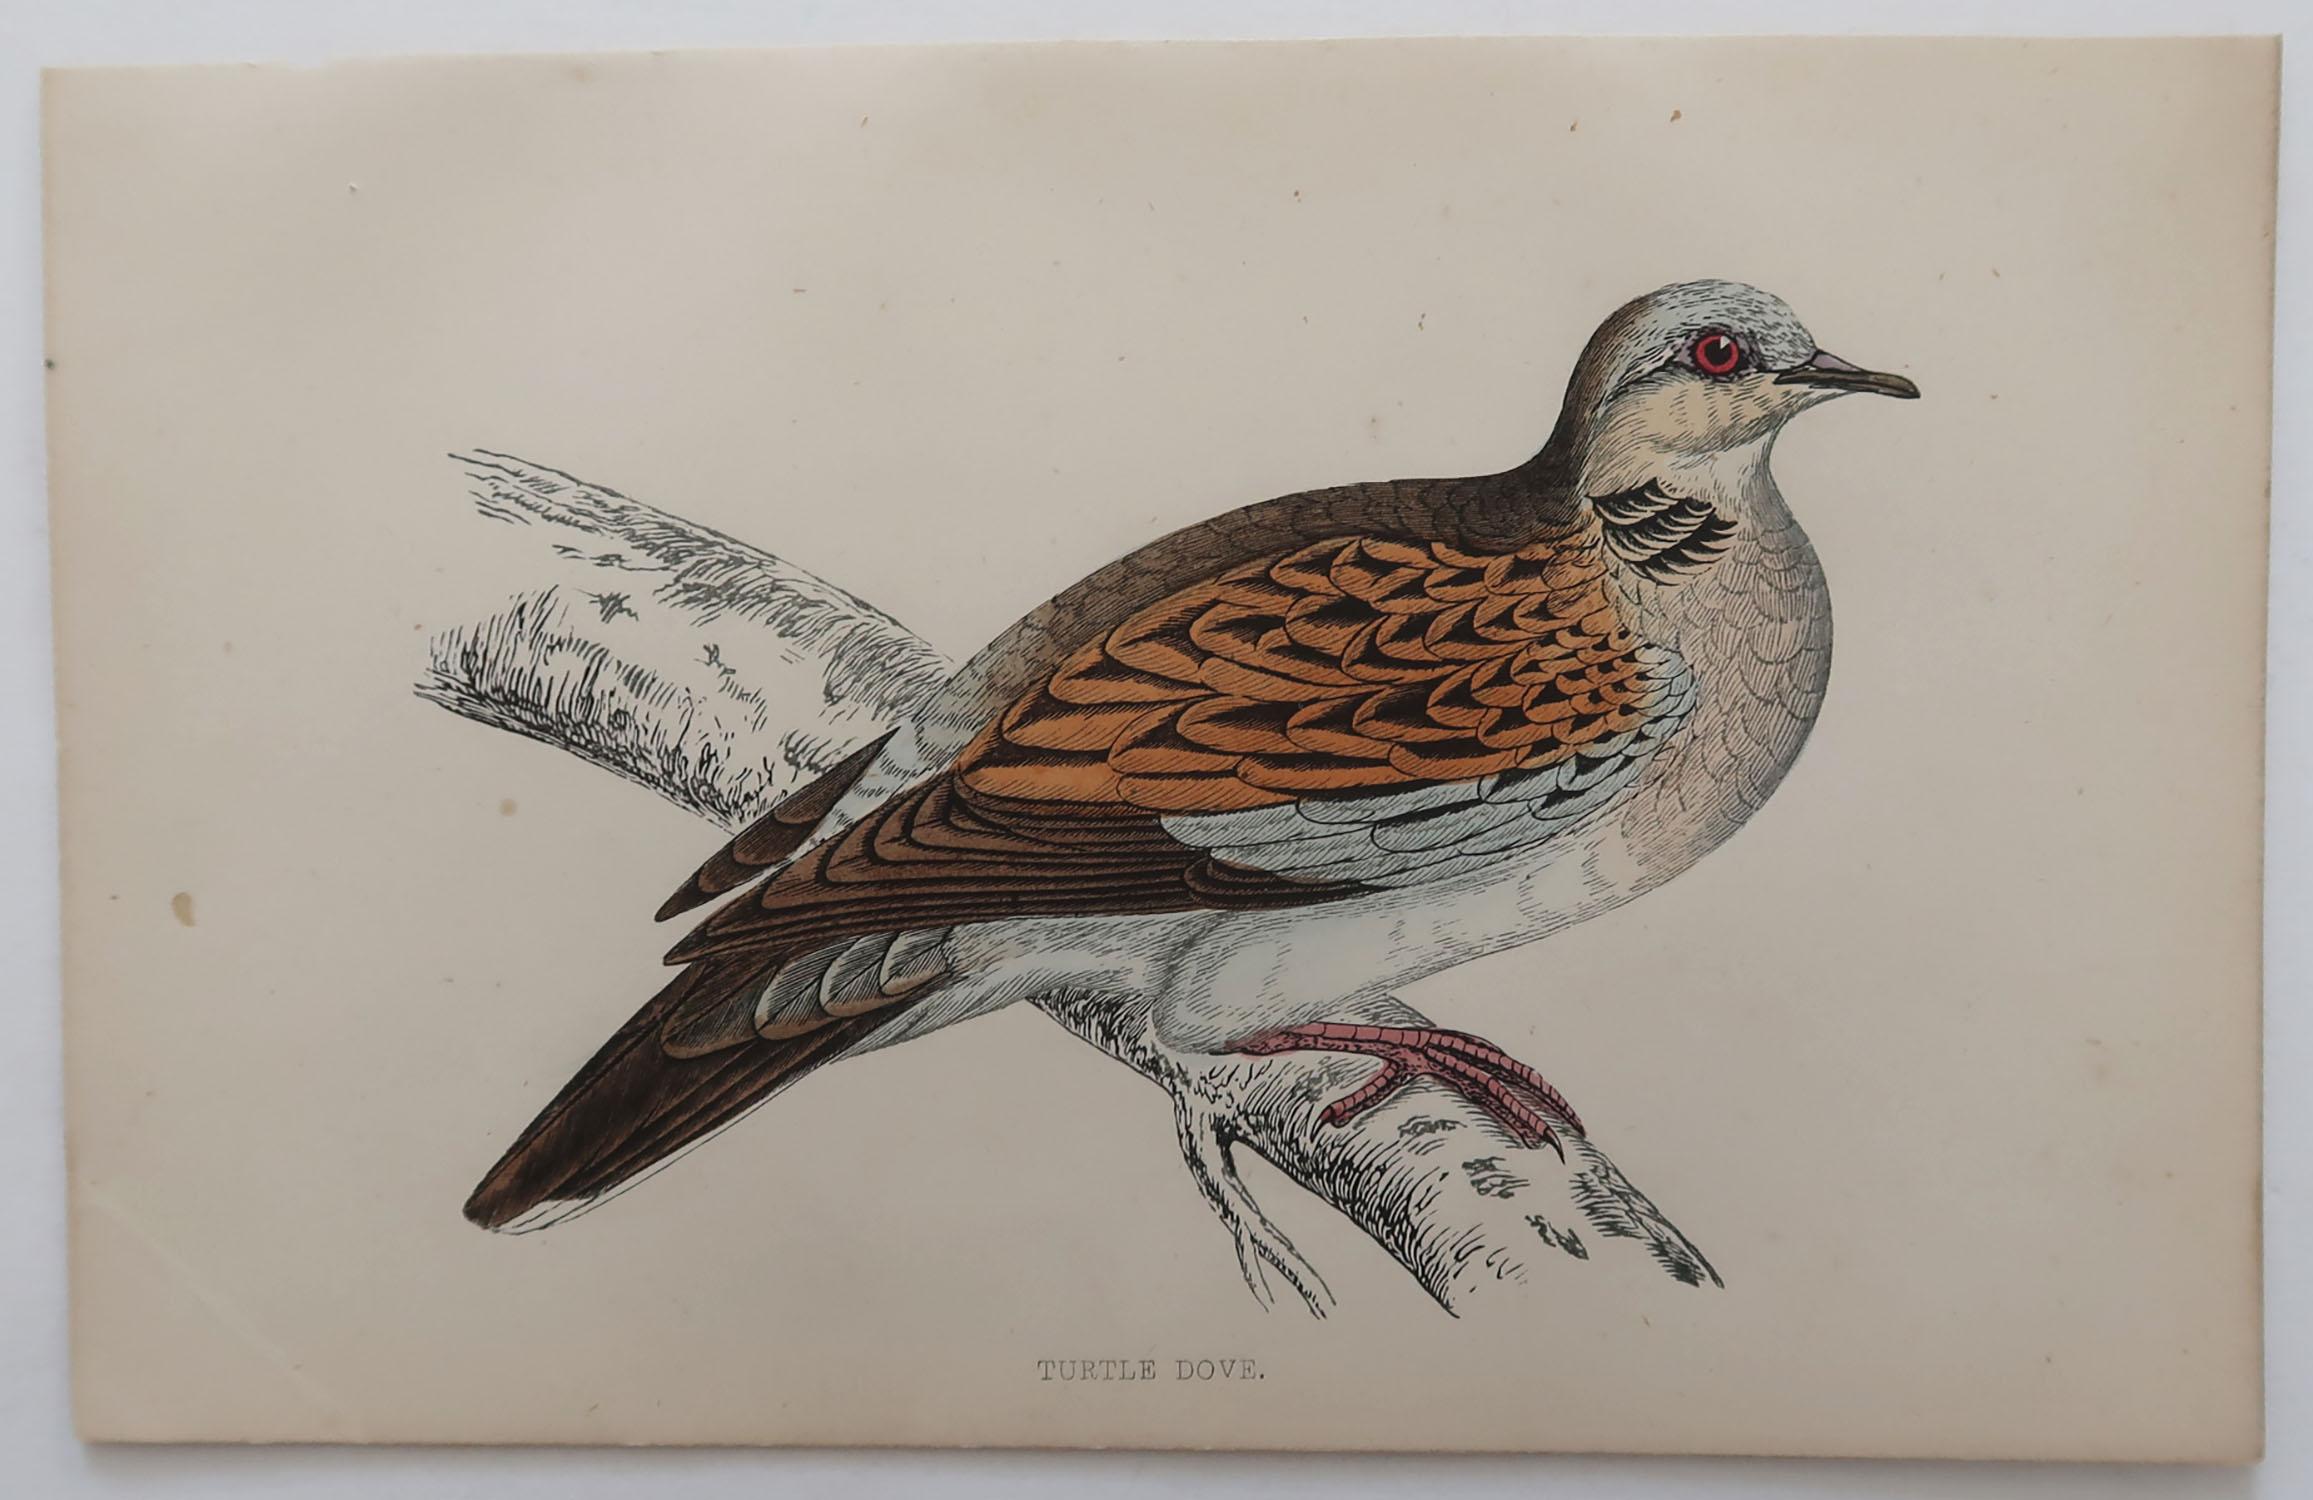 Folk Art Original Antique Bird Print, the Turtle Dove, circa 1870